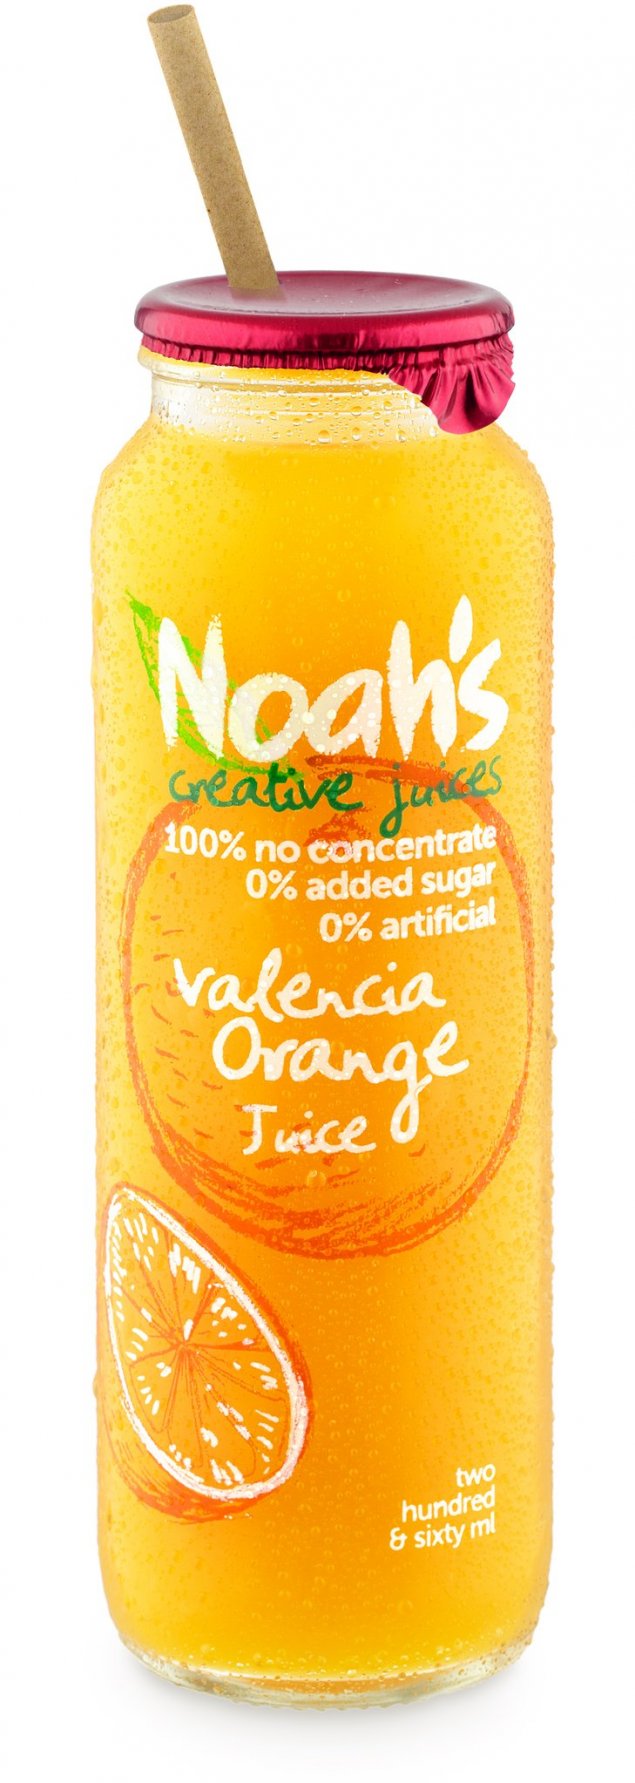 Noah's Fruit Juice 260ml - Orange